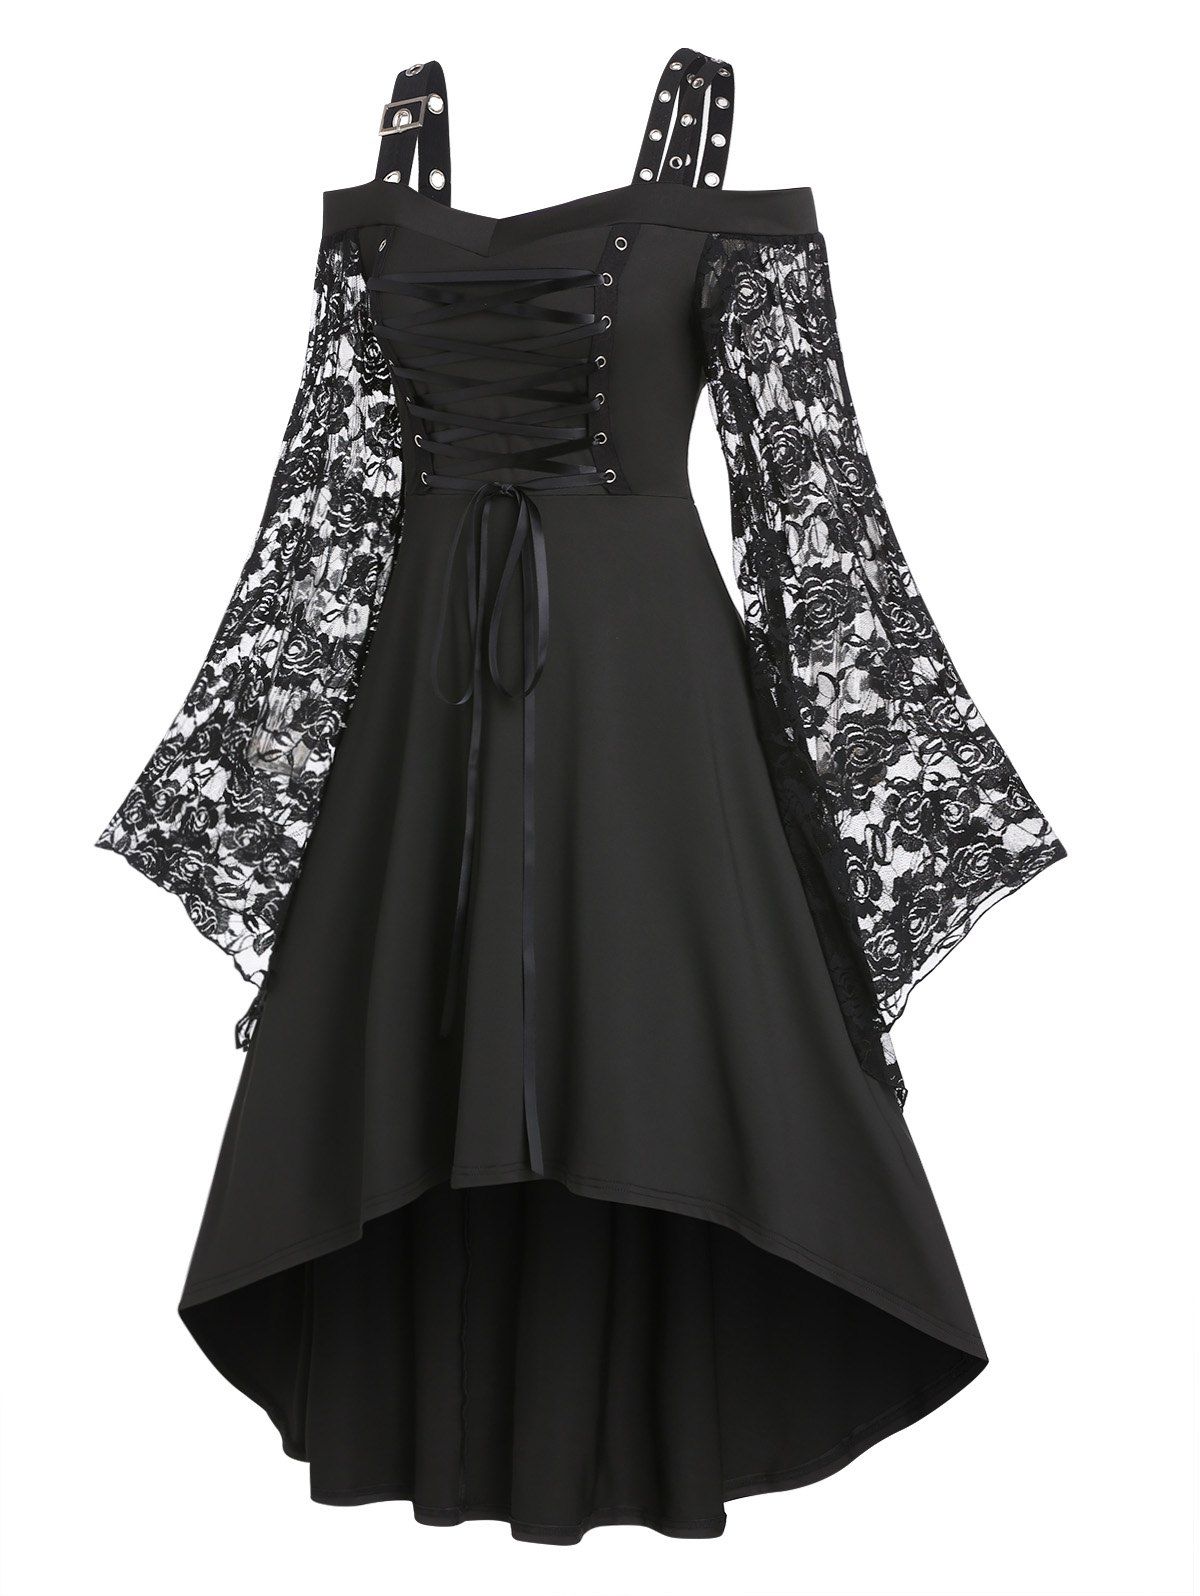 Gothic Dress Floral Lace Dress Lace Up Grommet Cold Shoulder Long Sleeve High Low Midi Dress - BLACK L